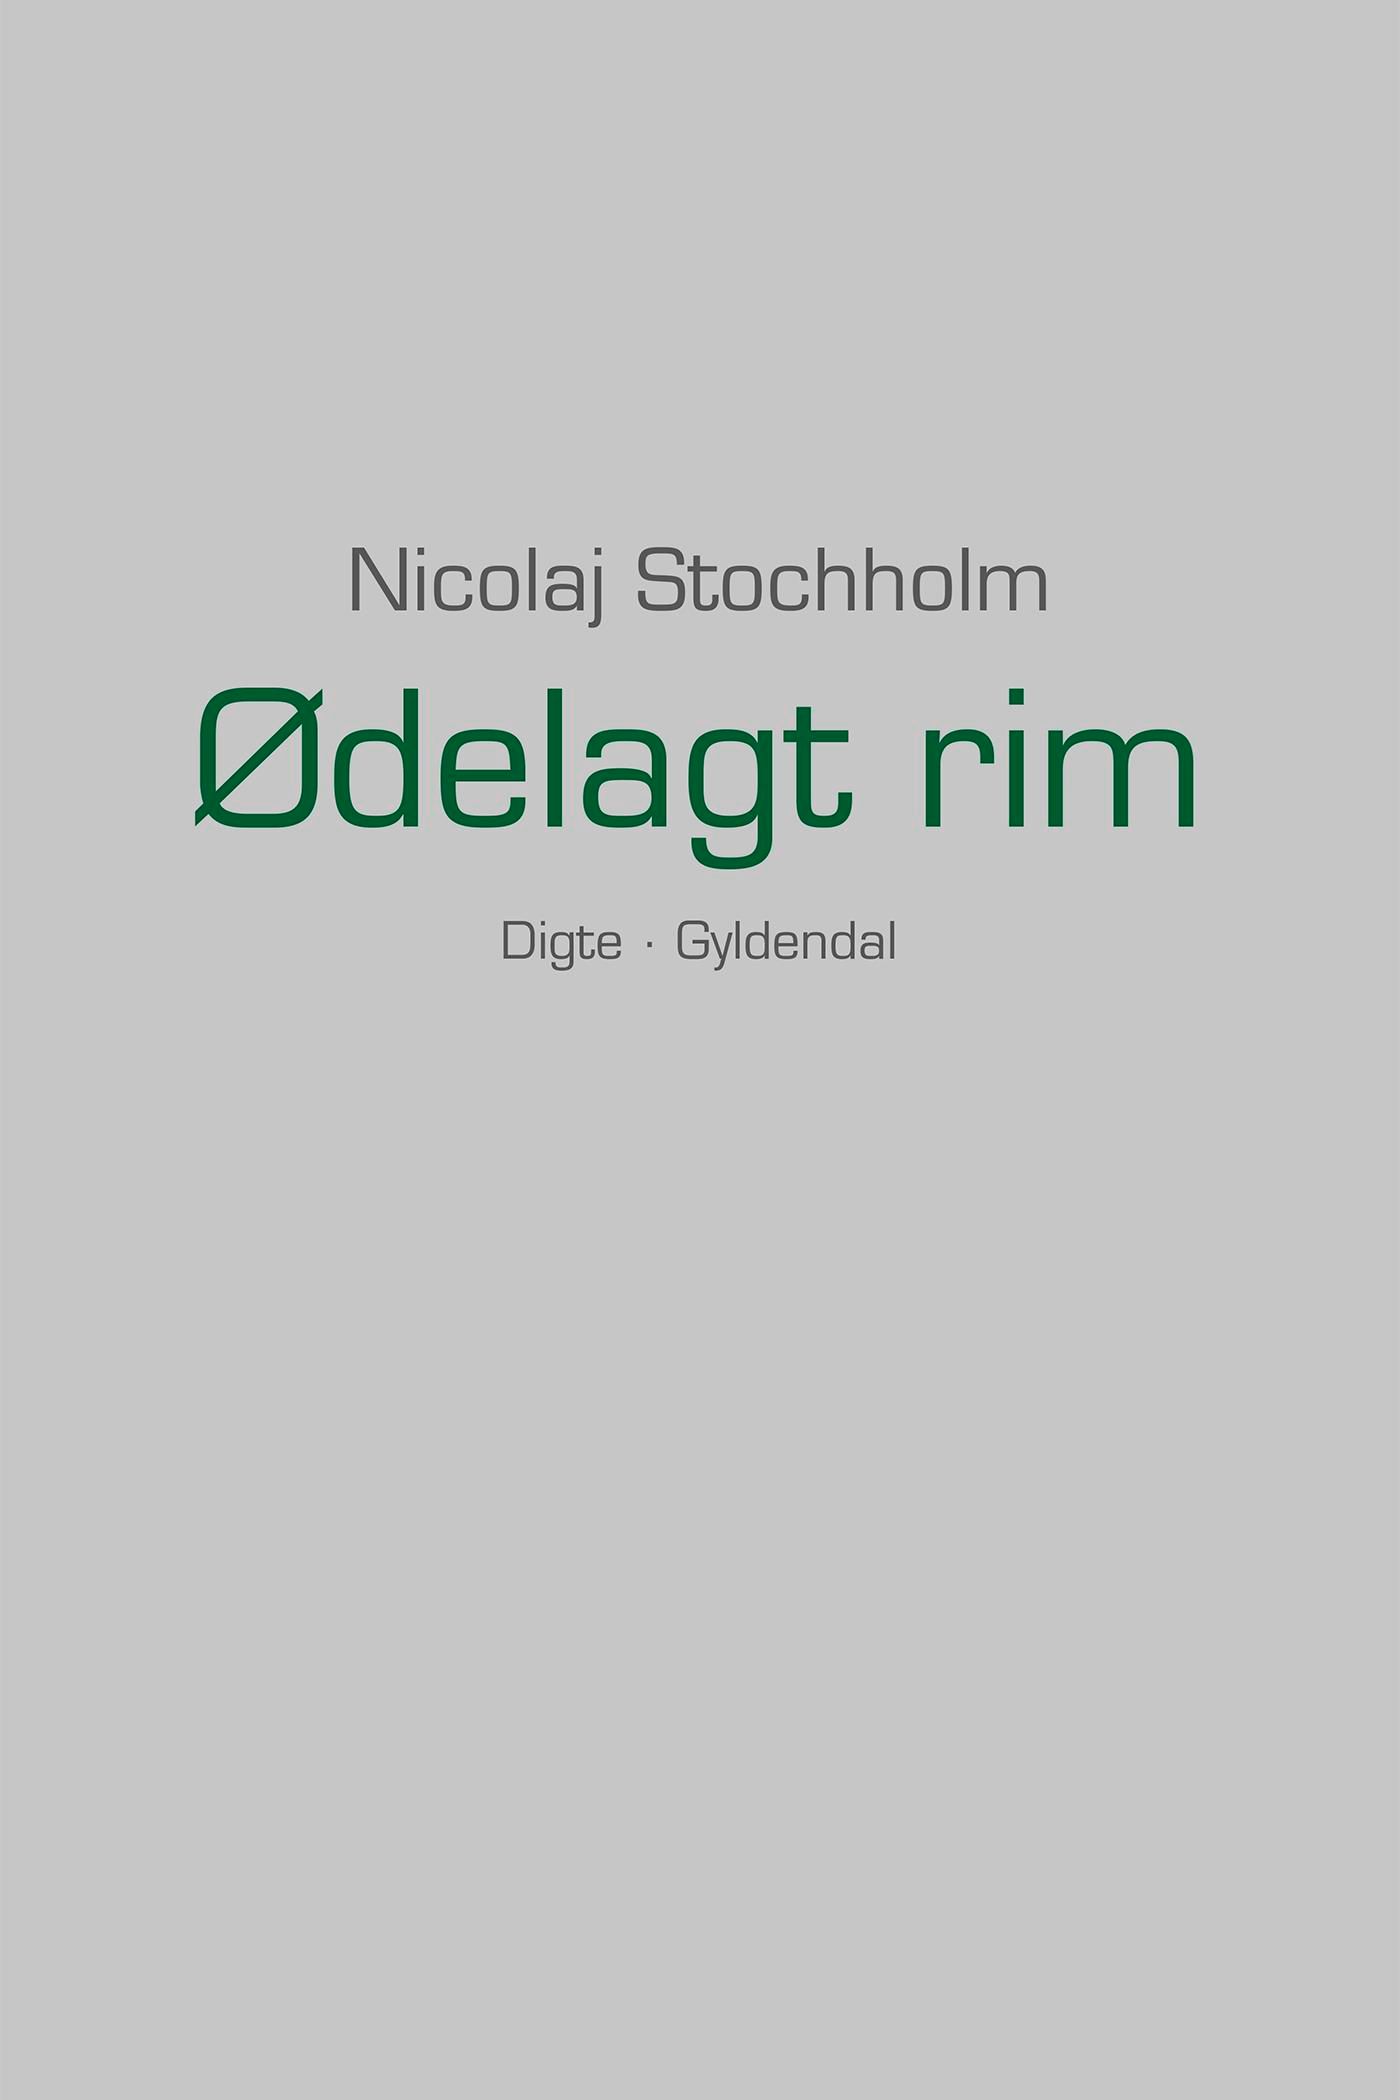 Ødelagt rim, e-bok av Nicolaj Stochholm